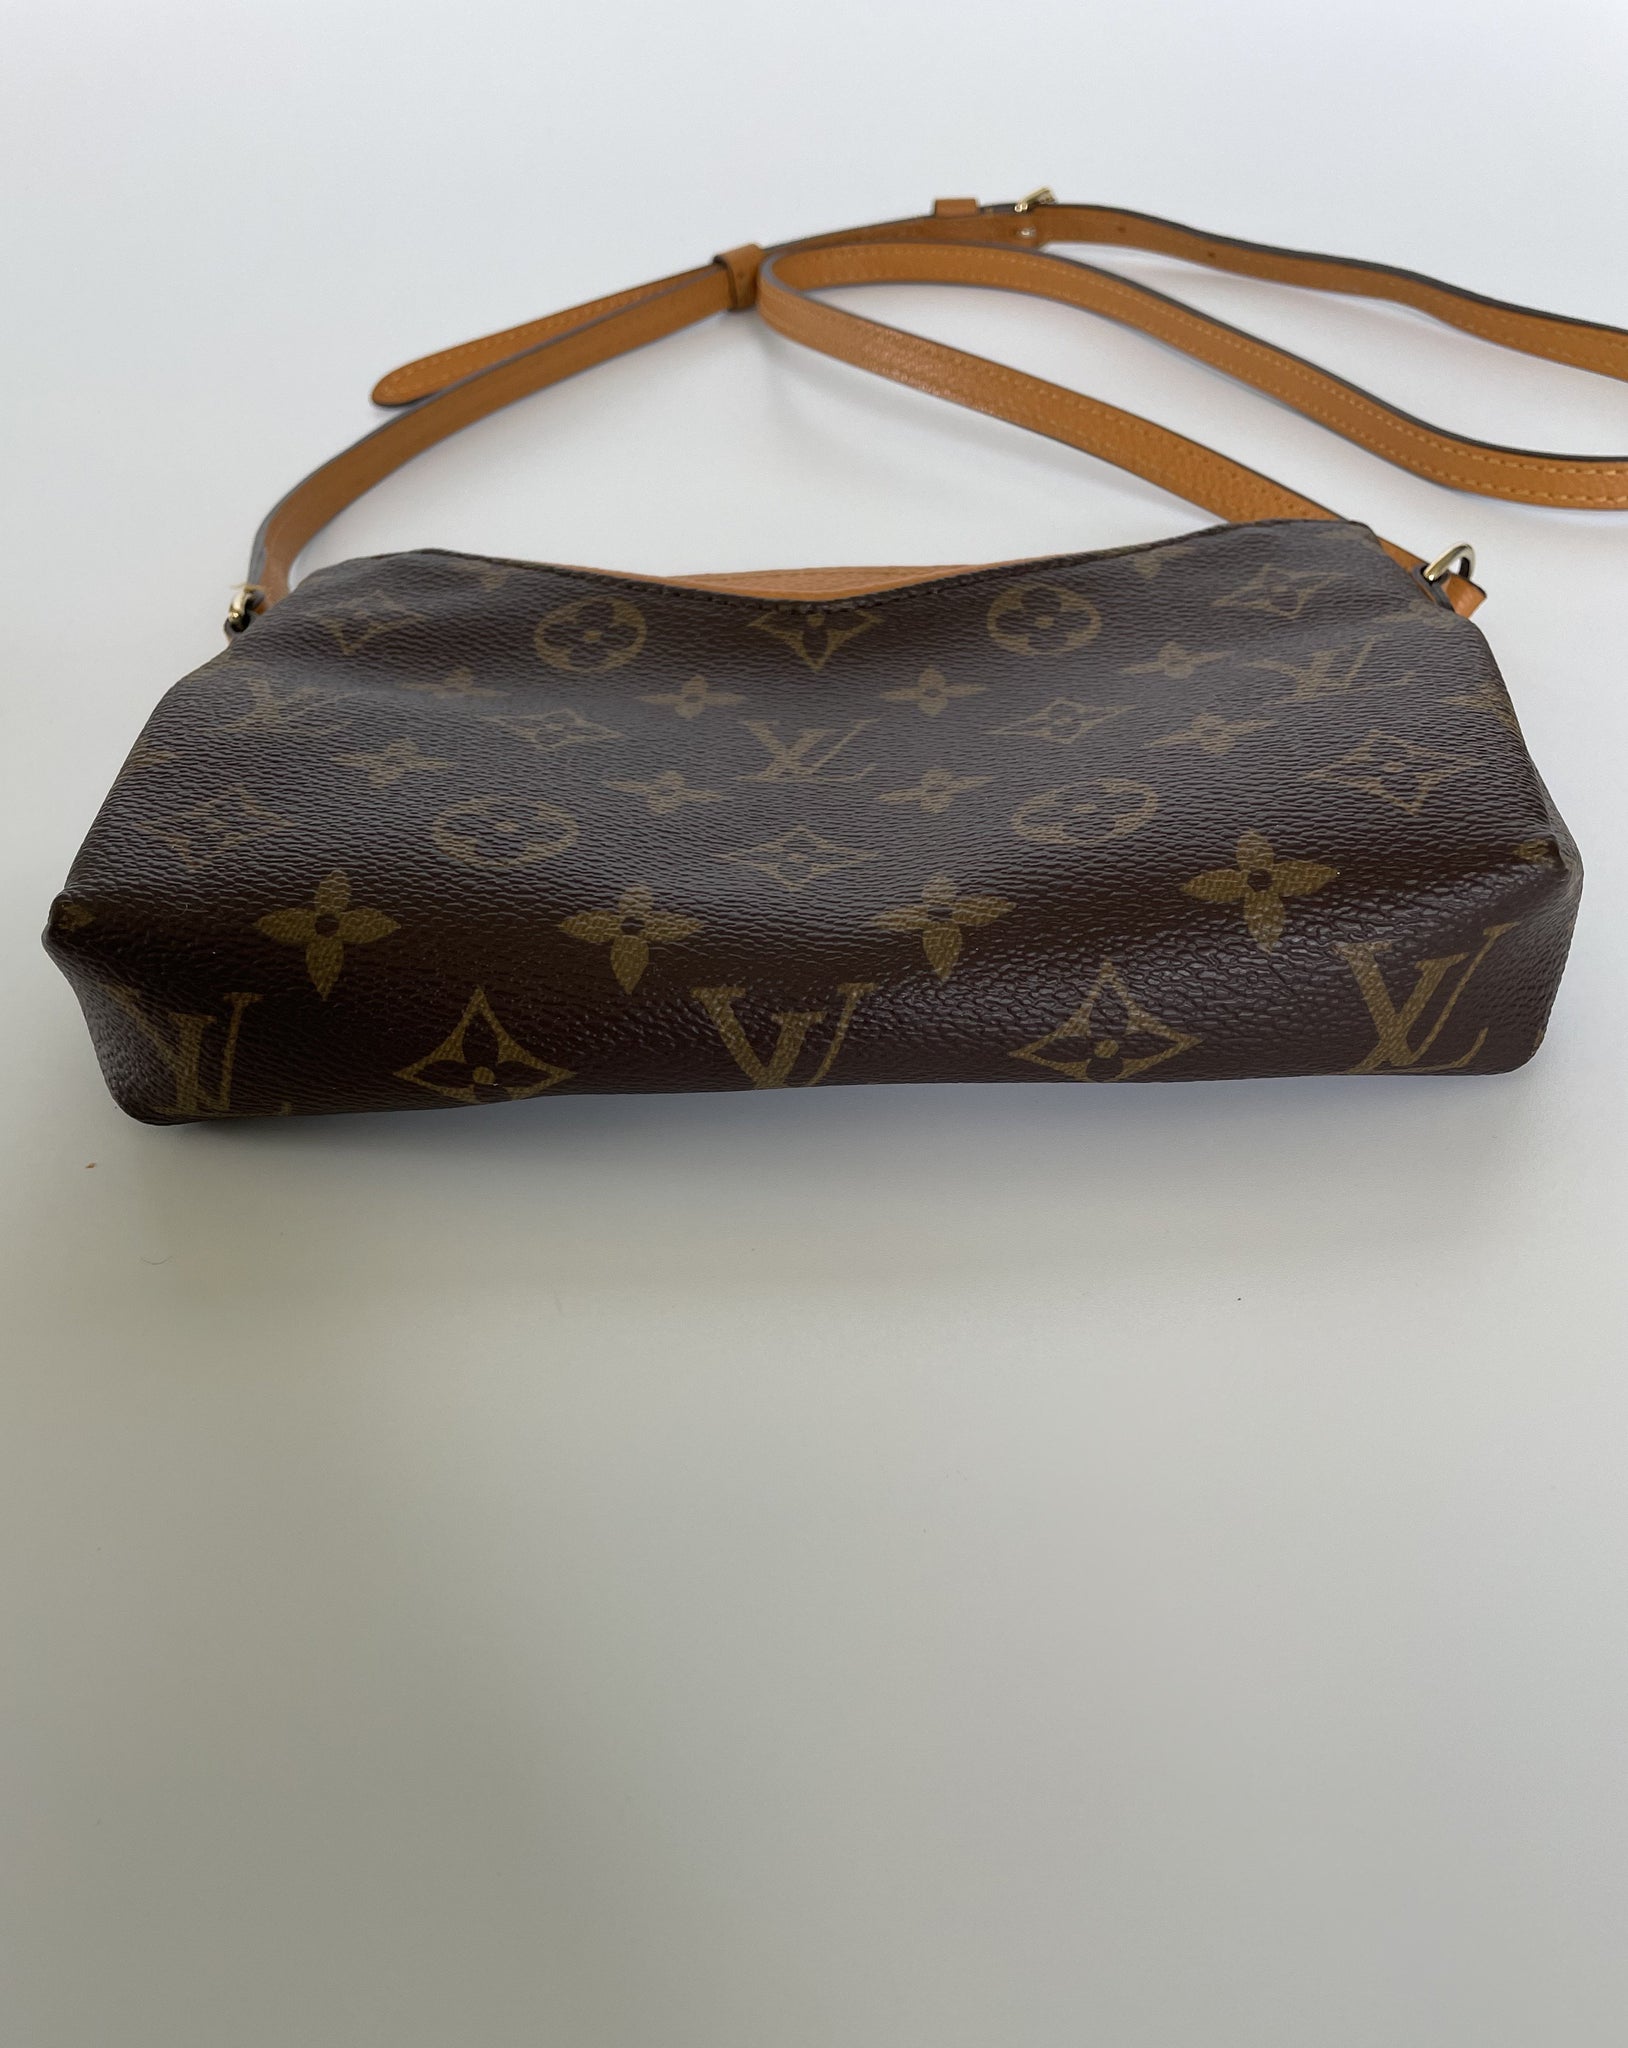 Louis Vuitton Neverfull Handbags for sale in Dublin Ireland  Facebook  Marketplace  Facebook